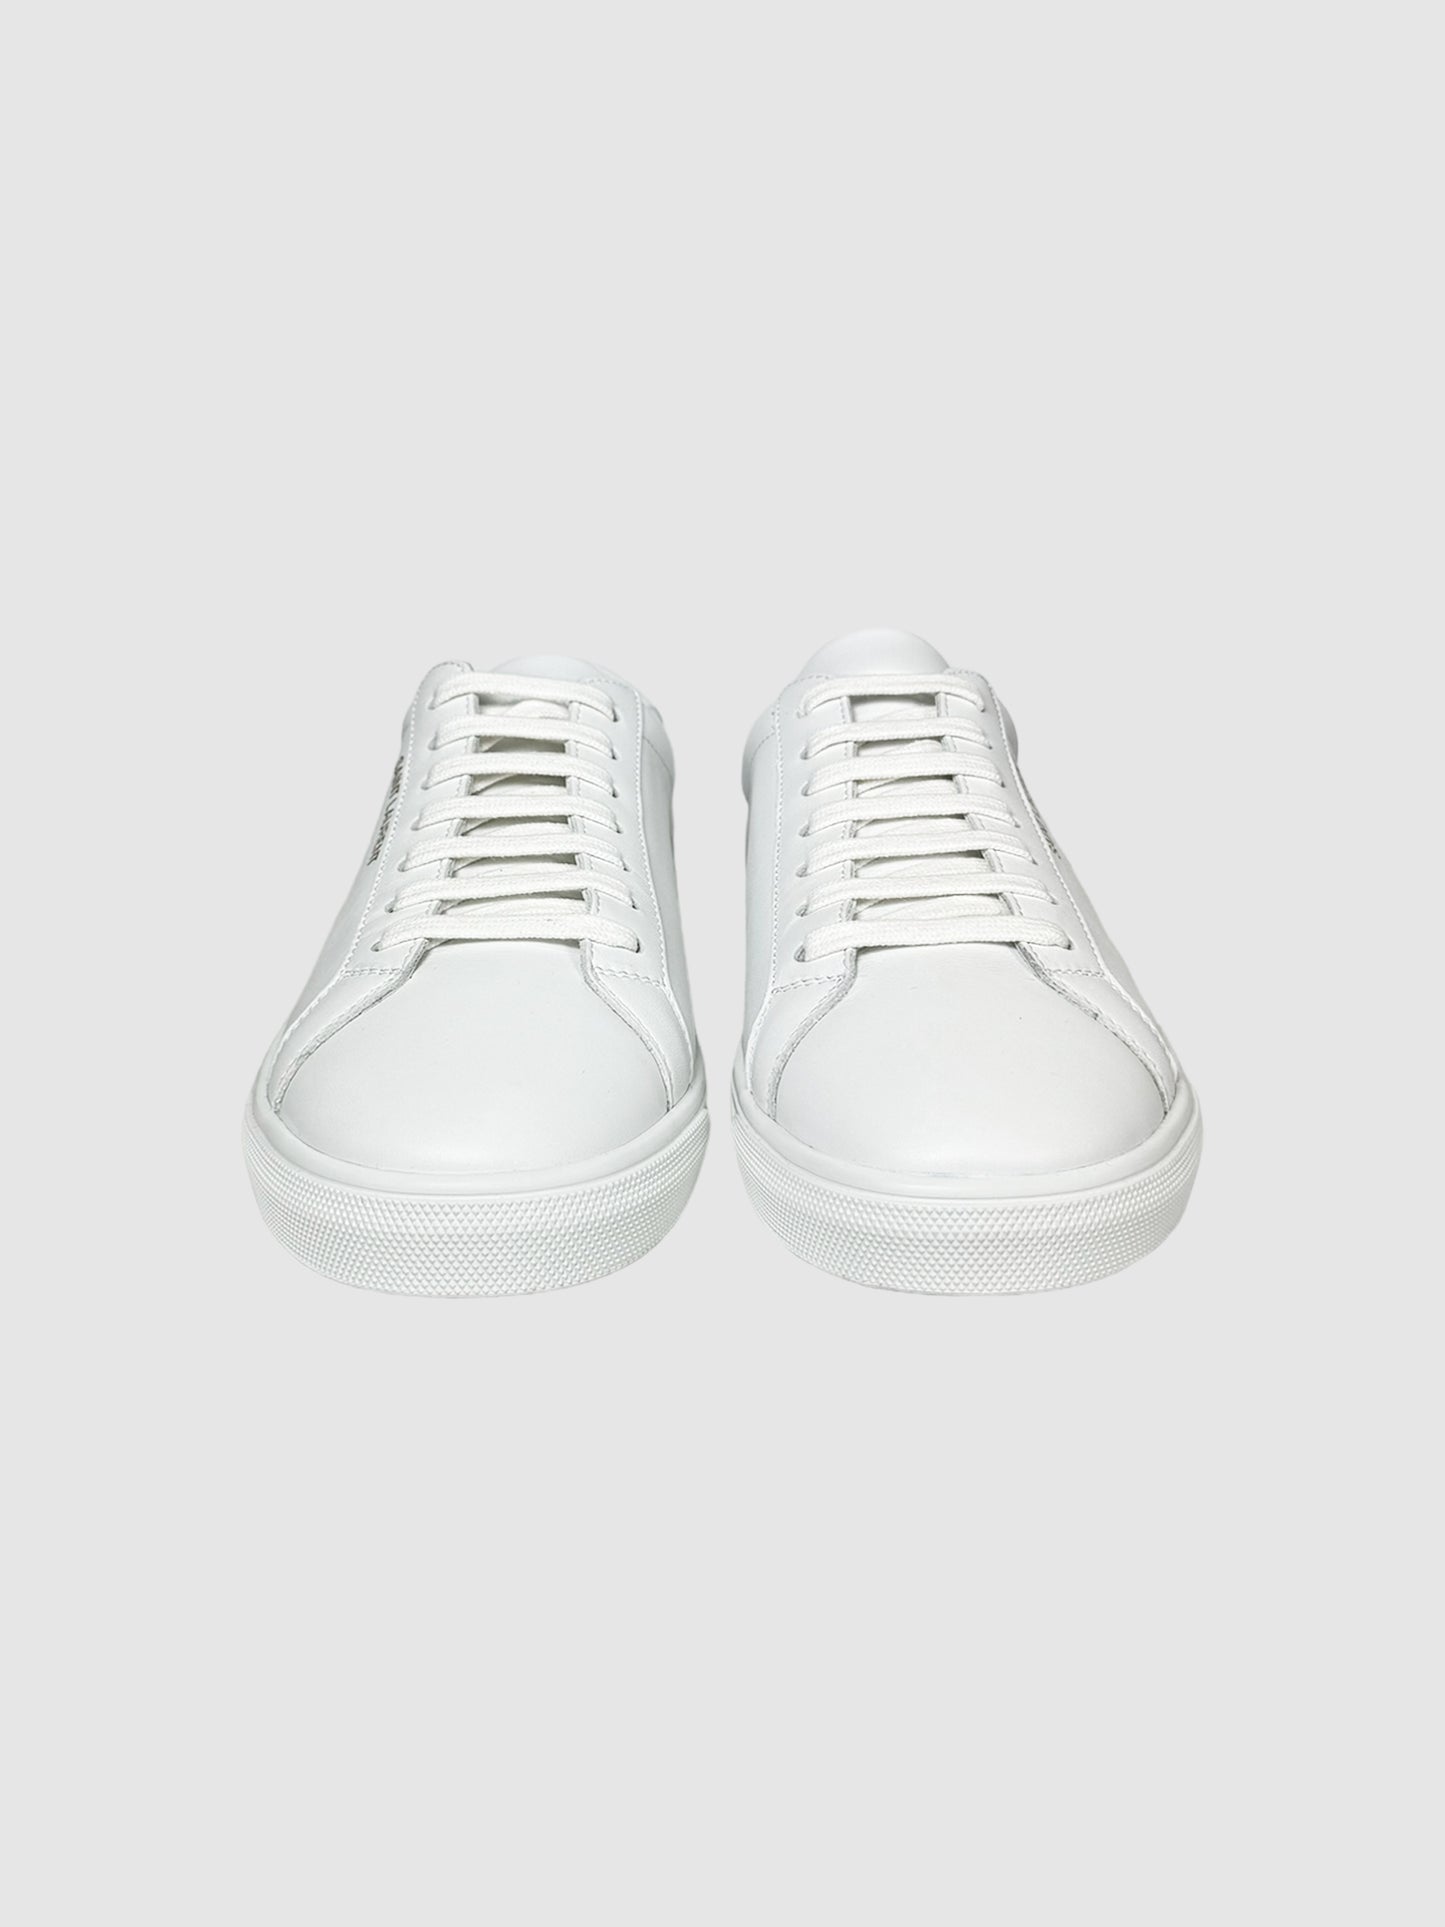 Saint Laurent Andy Sneakers - Size 39